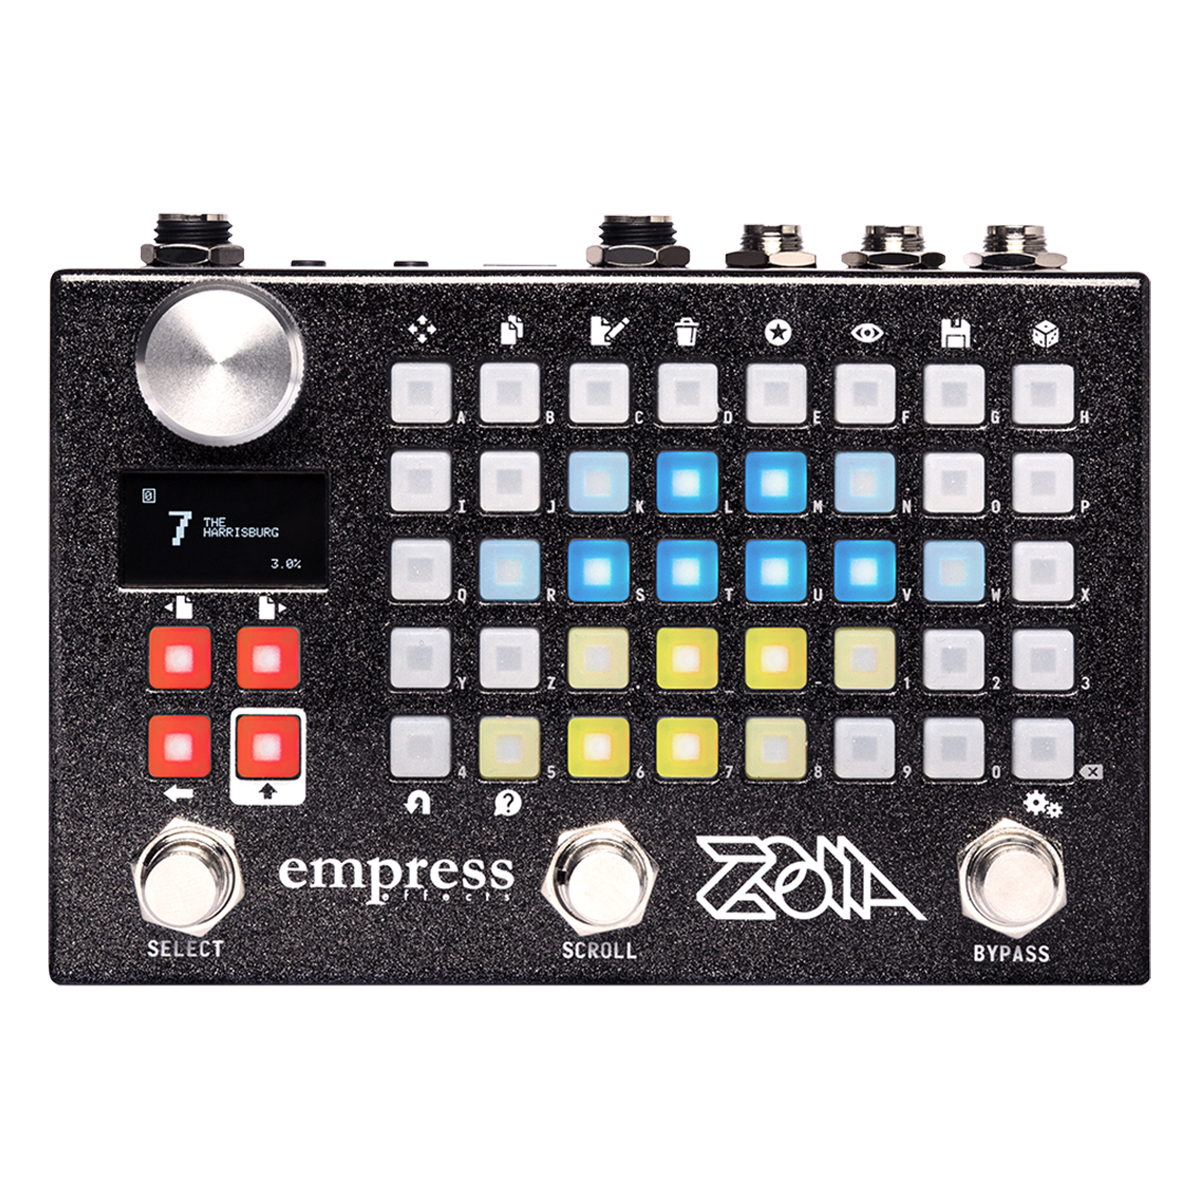 ZOIA – Empress Effects Inc.